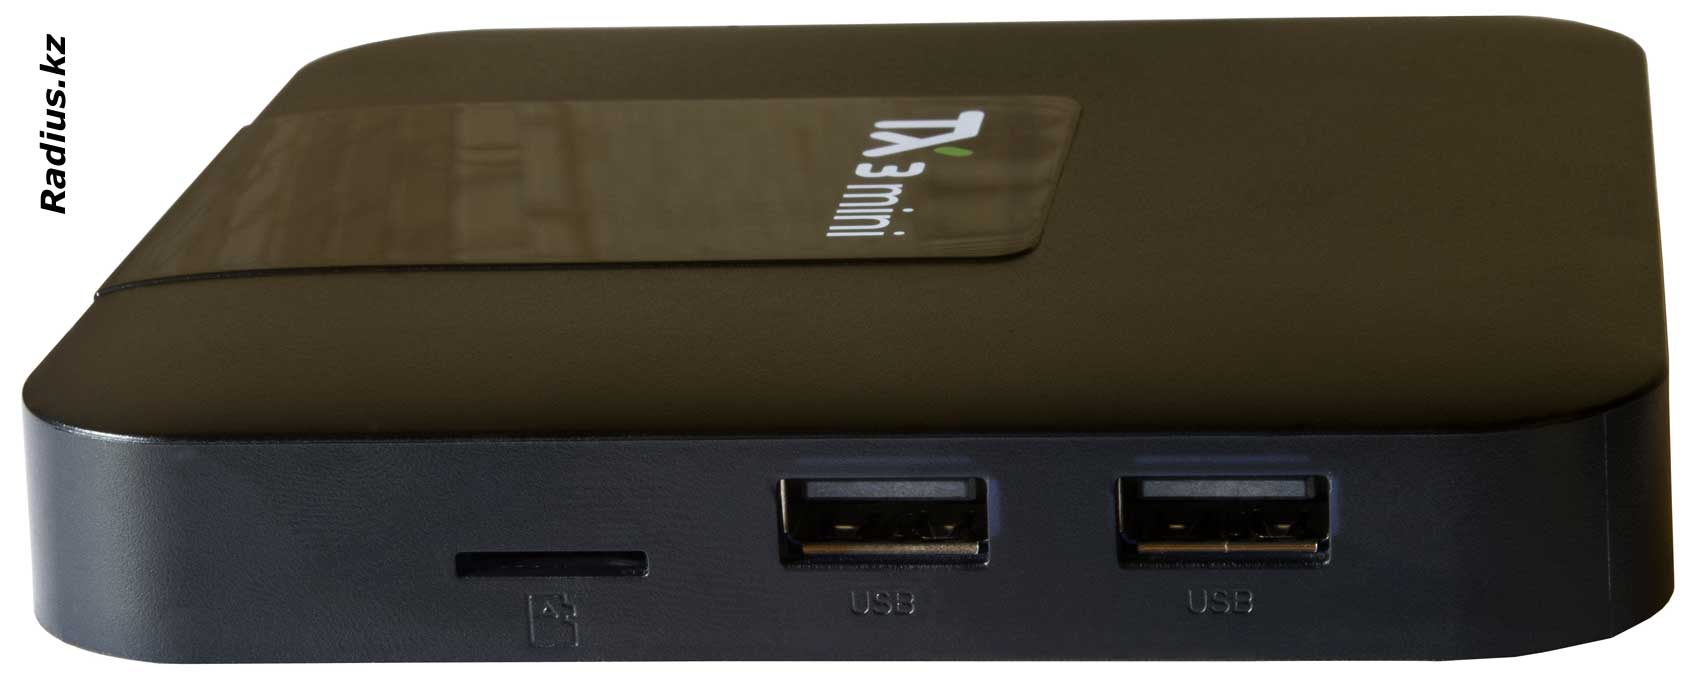 TX3 mini-A разъемы сбоку - USB, карты памяти